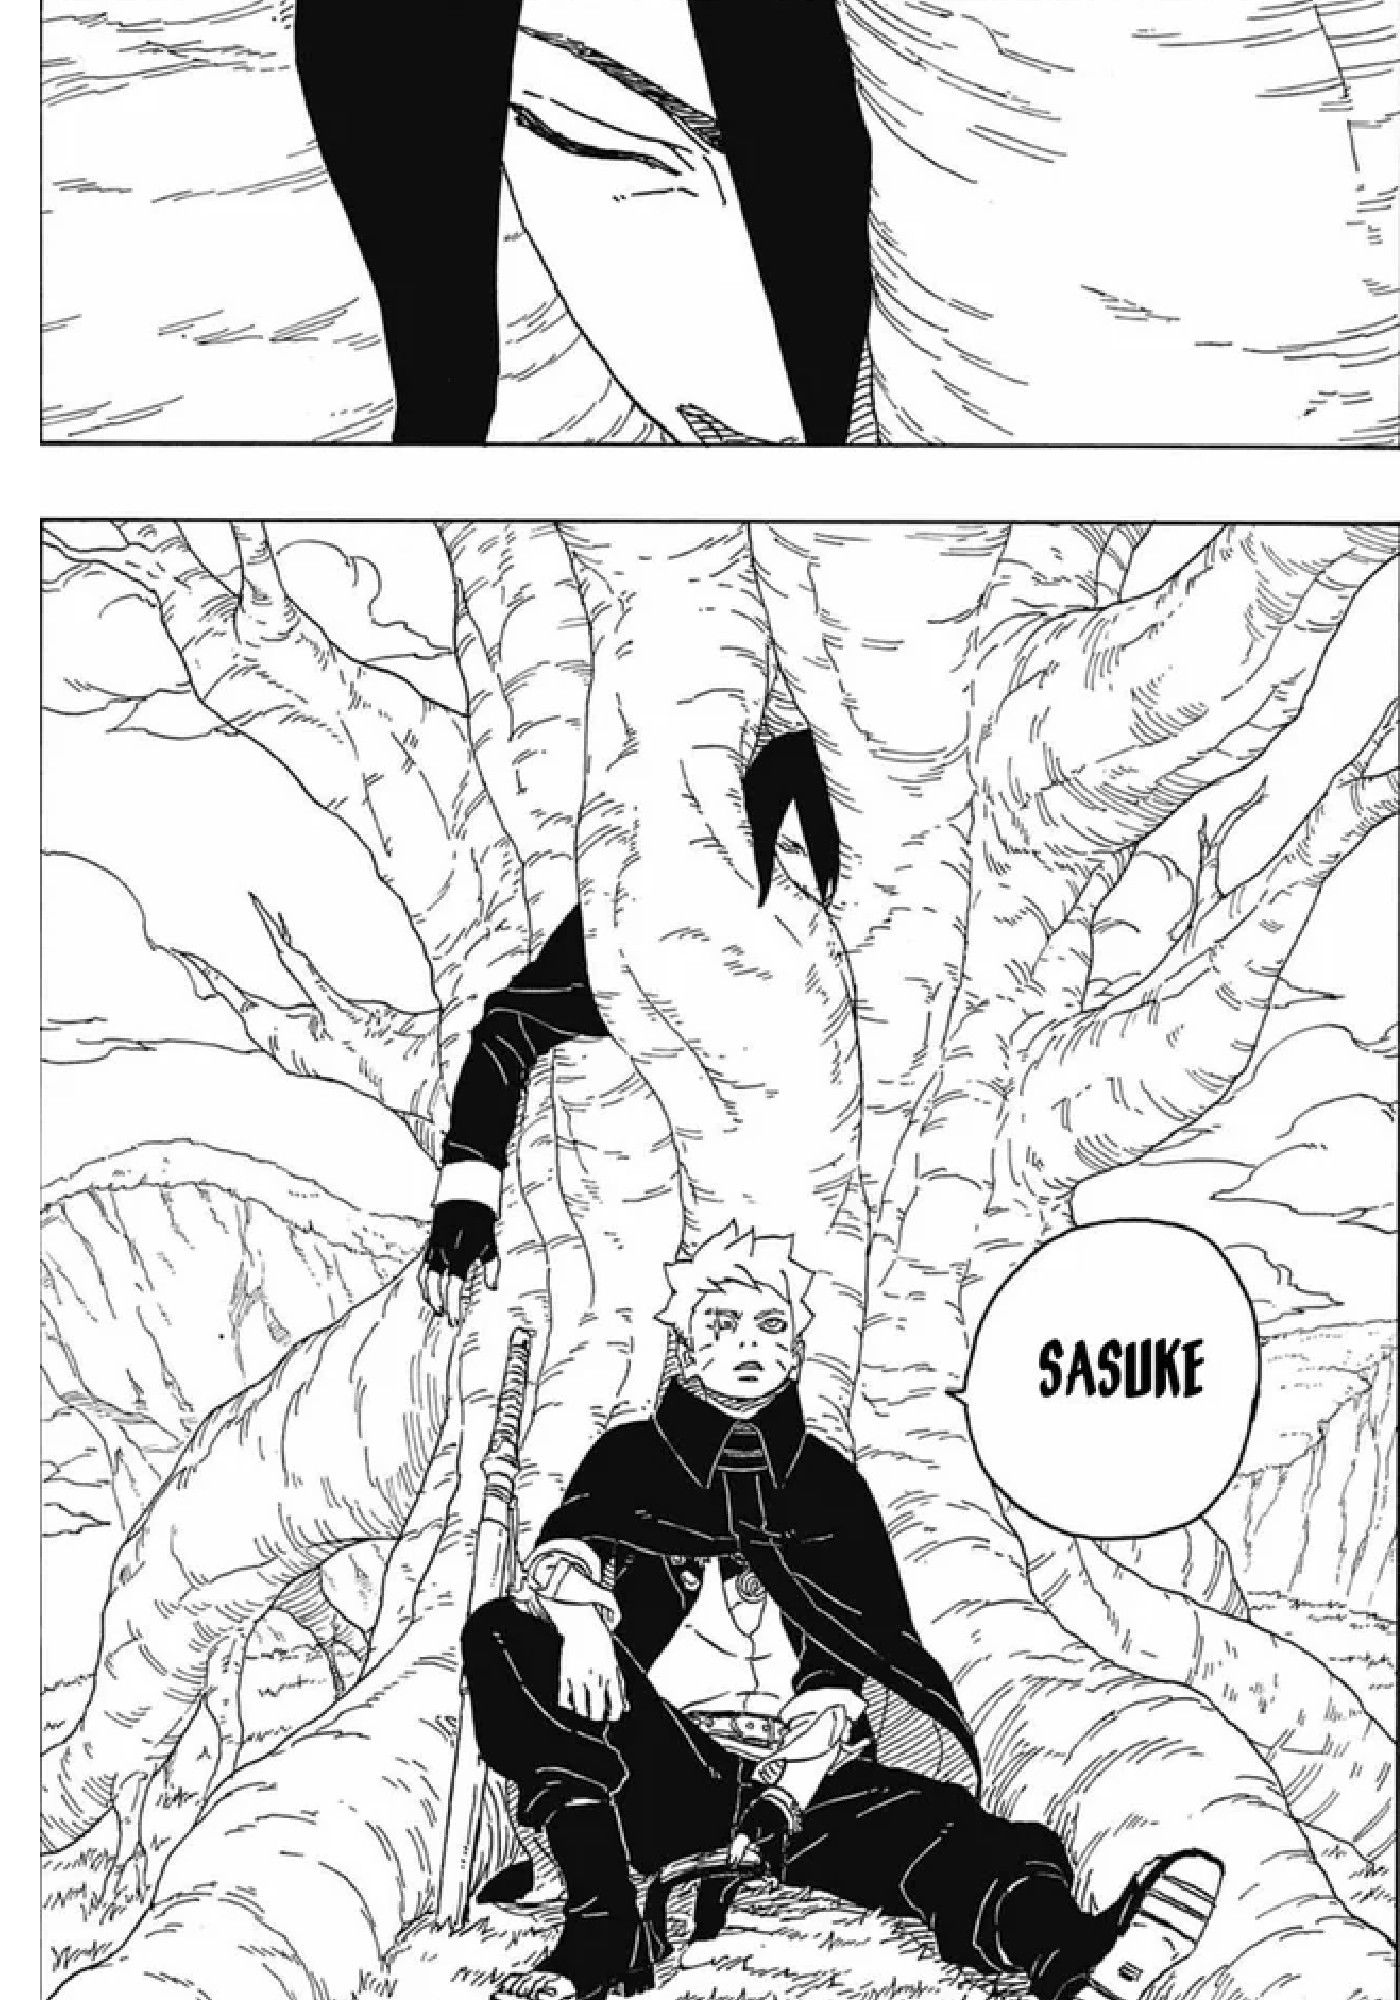 Sasuke dans un arbre